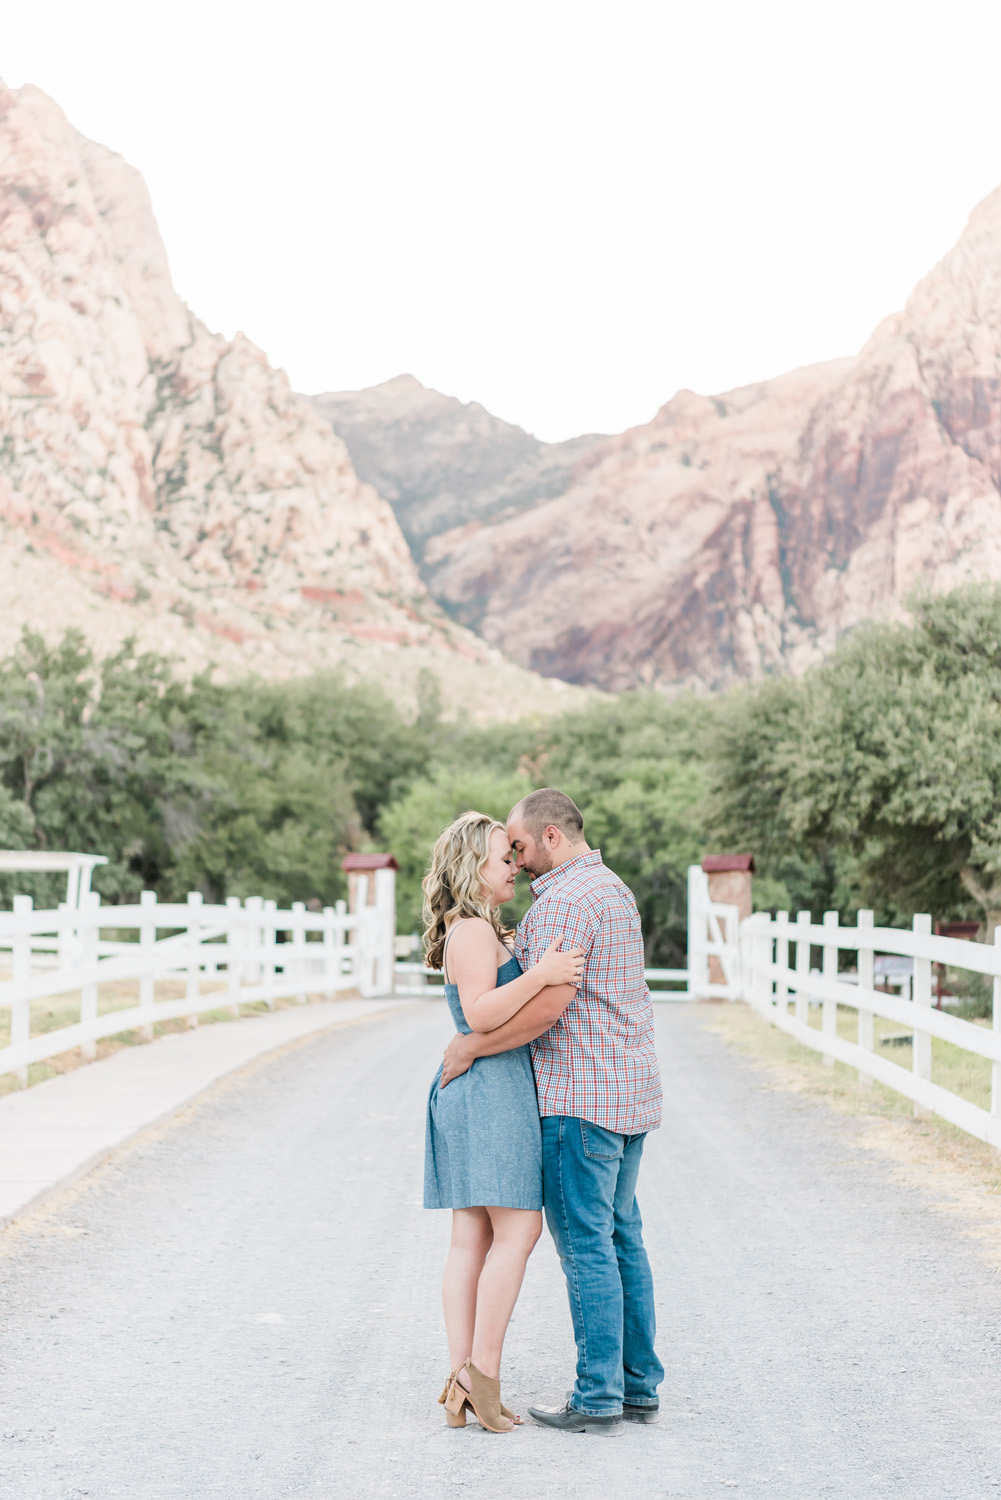 Spring Mountain Ranch Engagement Session | Kristen Marie Weddings + Portraits, Las Vegas Engagement Photographer Kristen Marie